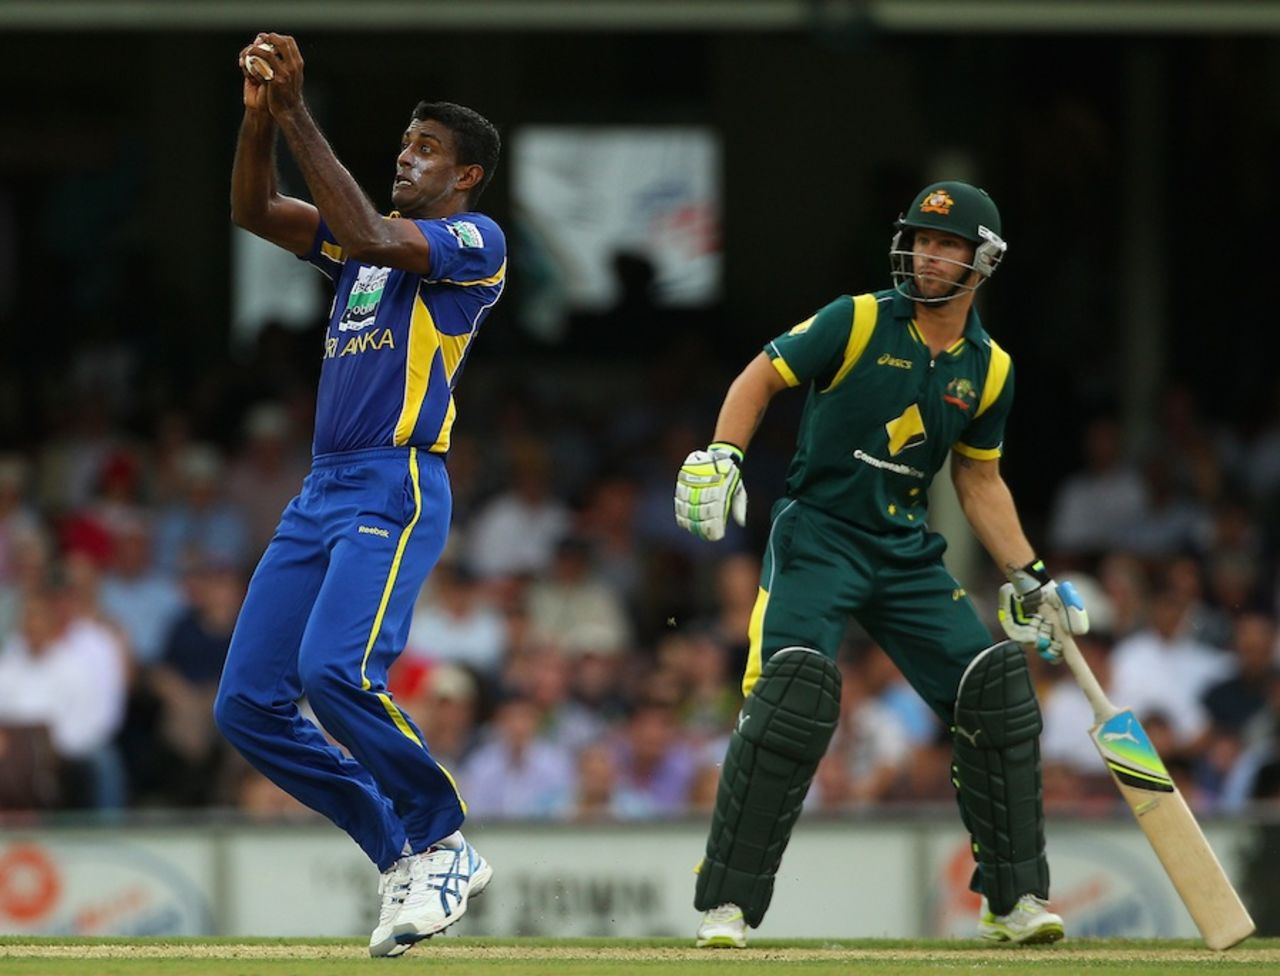 Farveez Maharoof has Ricky Ponting caught and bowled, Australia v Sri Lanka, CB Series, Sydney, February 17, 2012